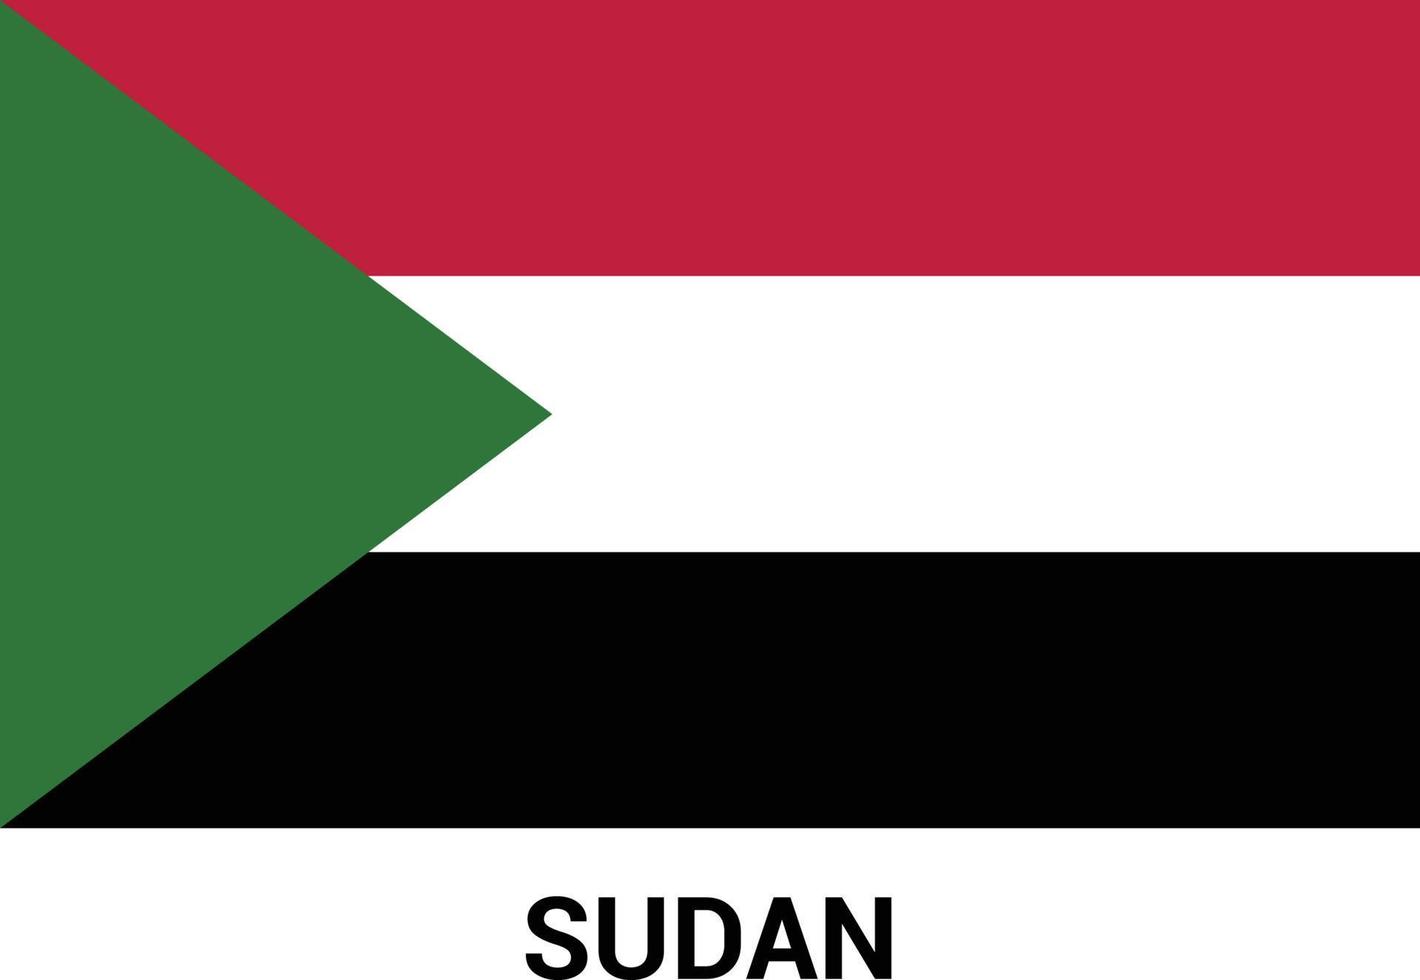 Sudan Flag design vector